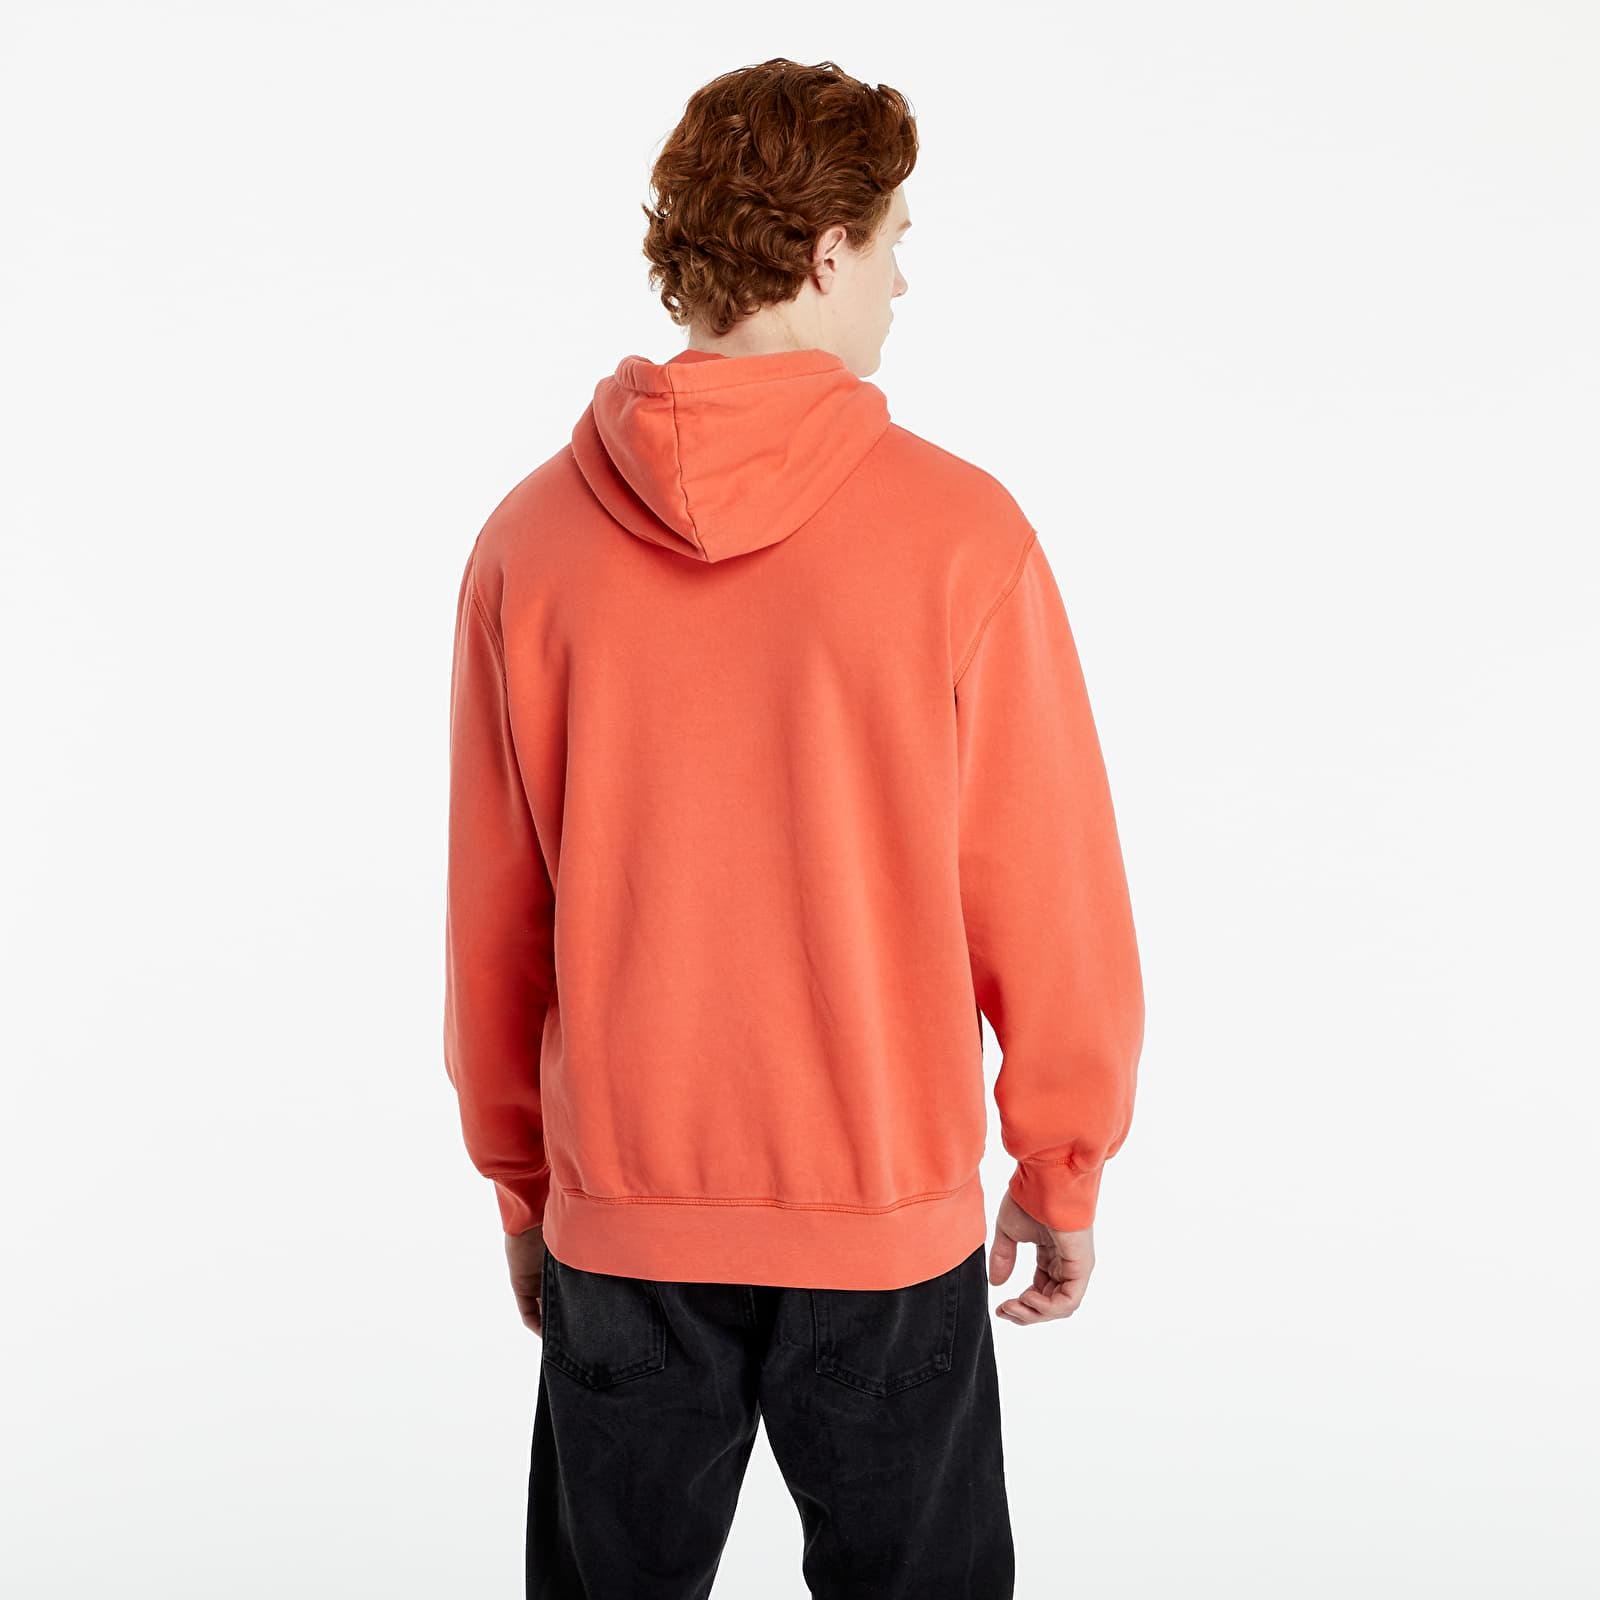 adidas Originals Adidas Dyed Hoodie Hazy Copper in Orange for Men - Lyst